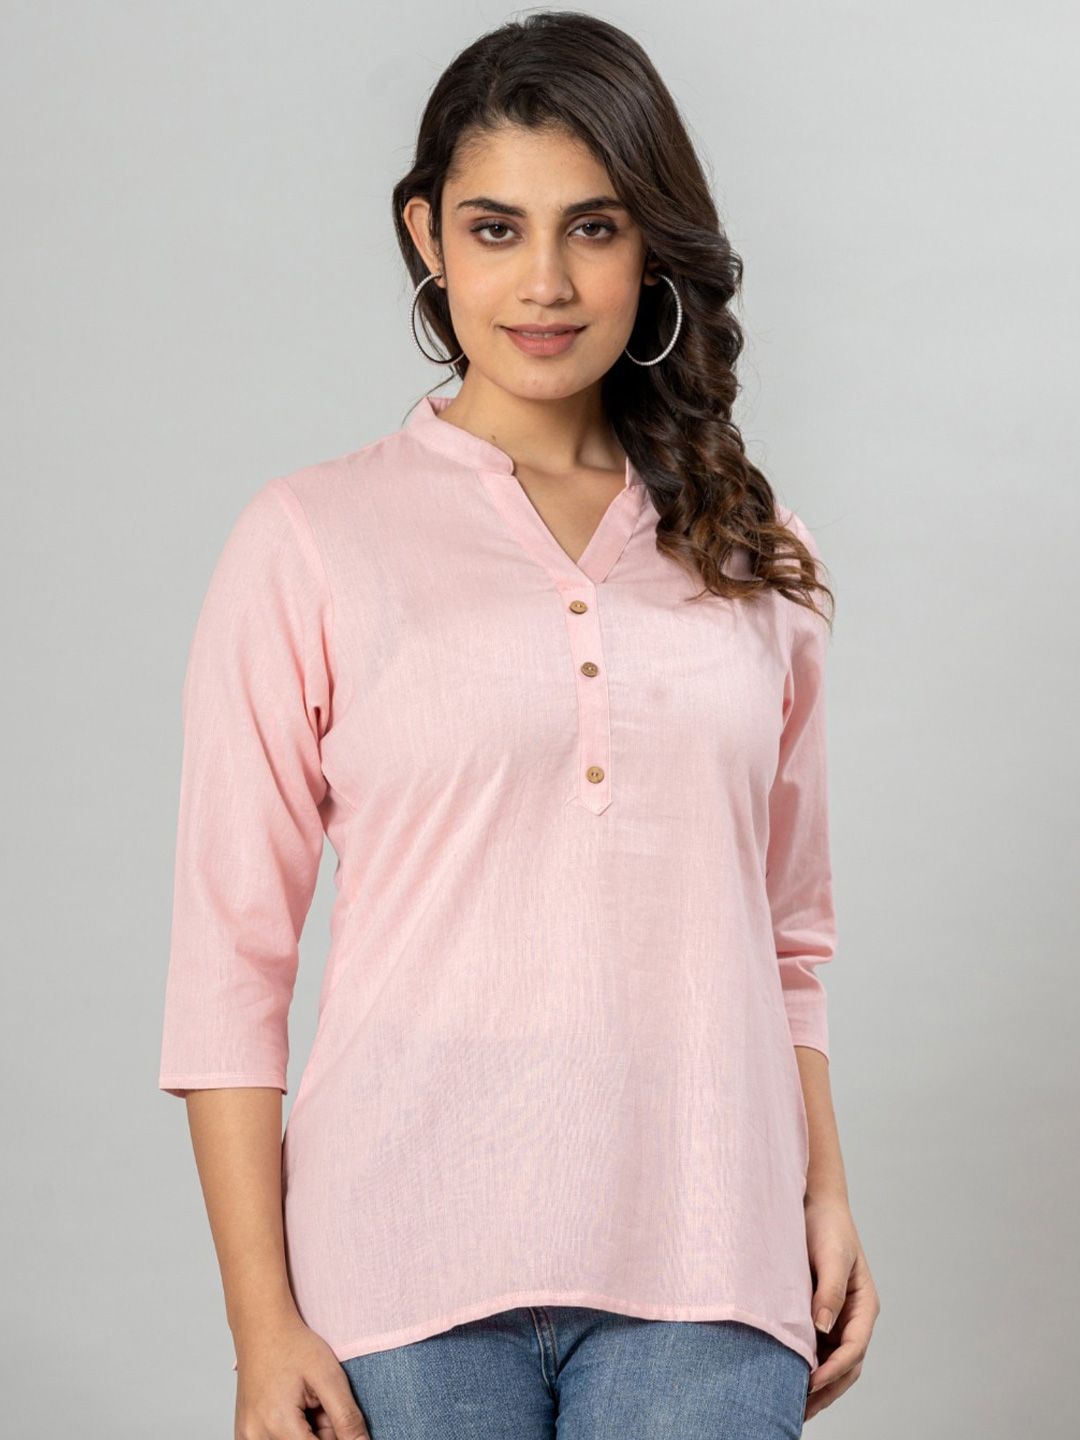 VEDANA Mandarin Collar Cotton Shirt Style Top Price in India